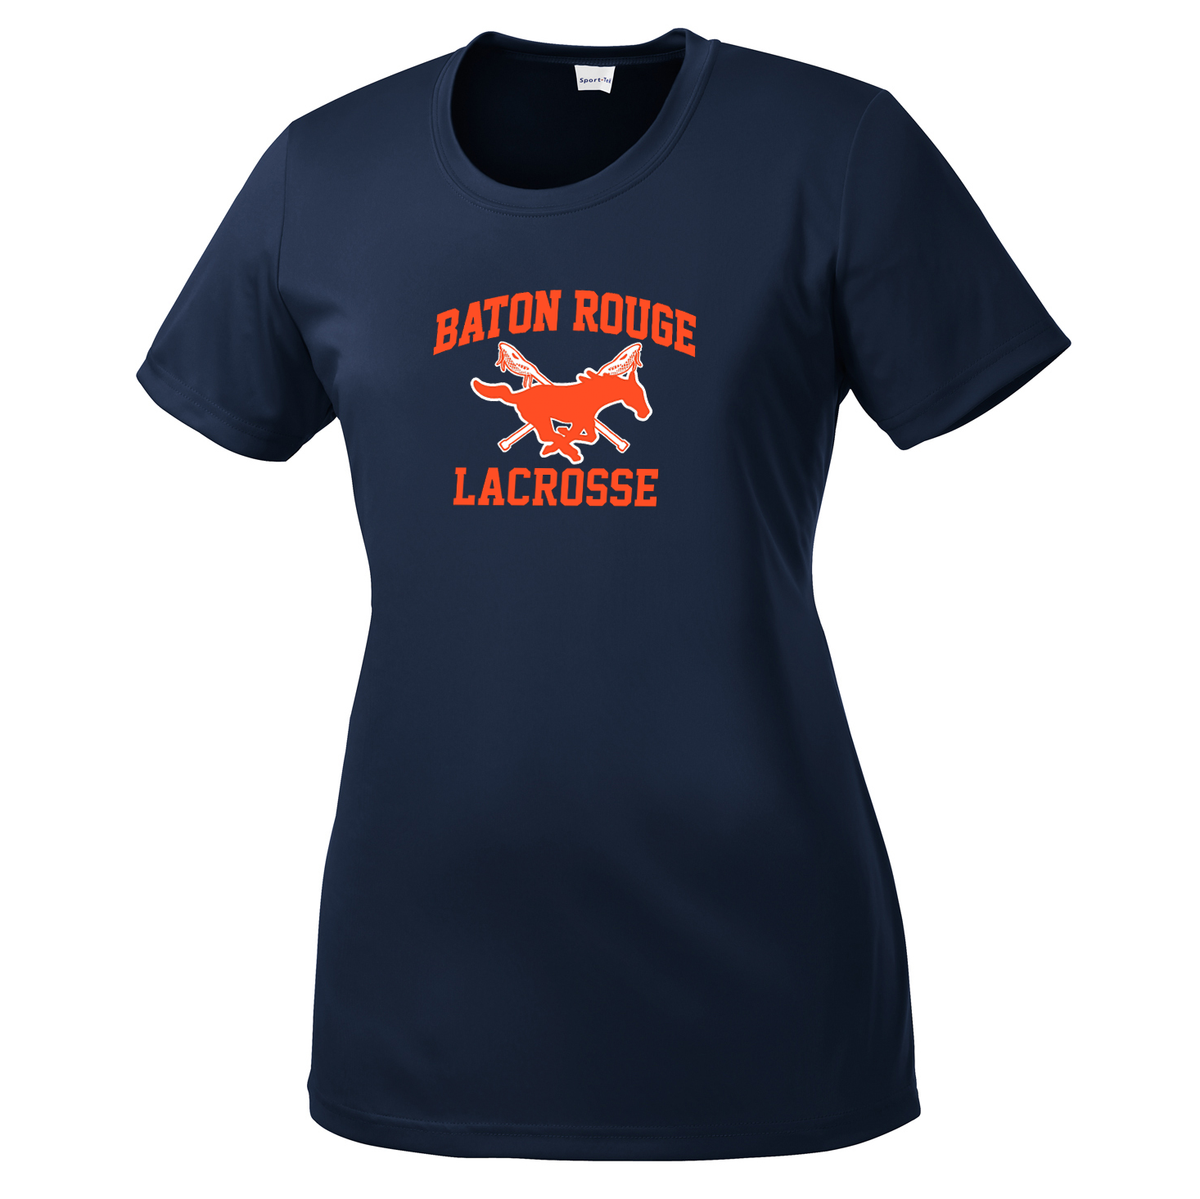 Baton Rouge Mustangs Lacrosse Women's Performance Tee